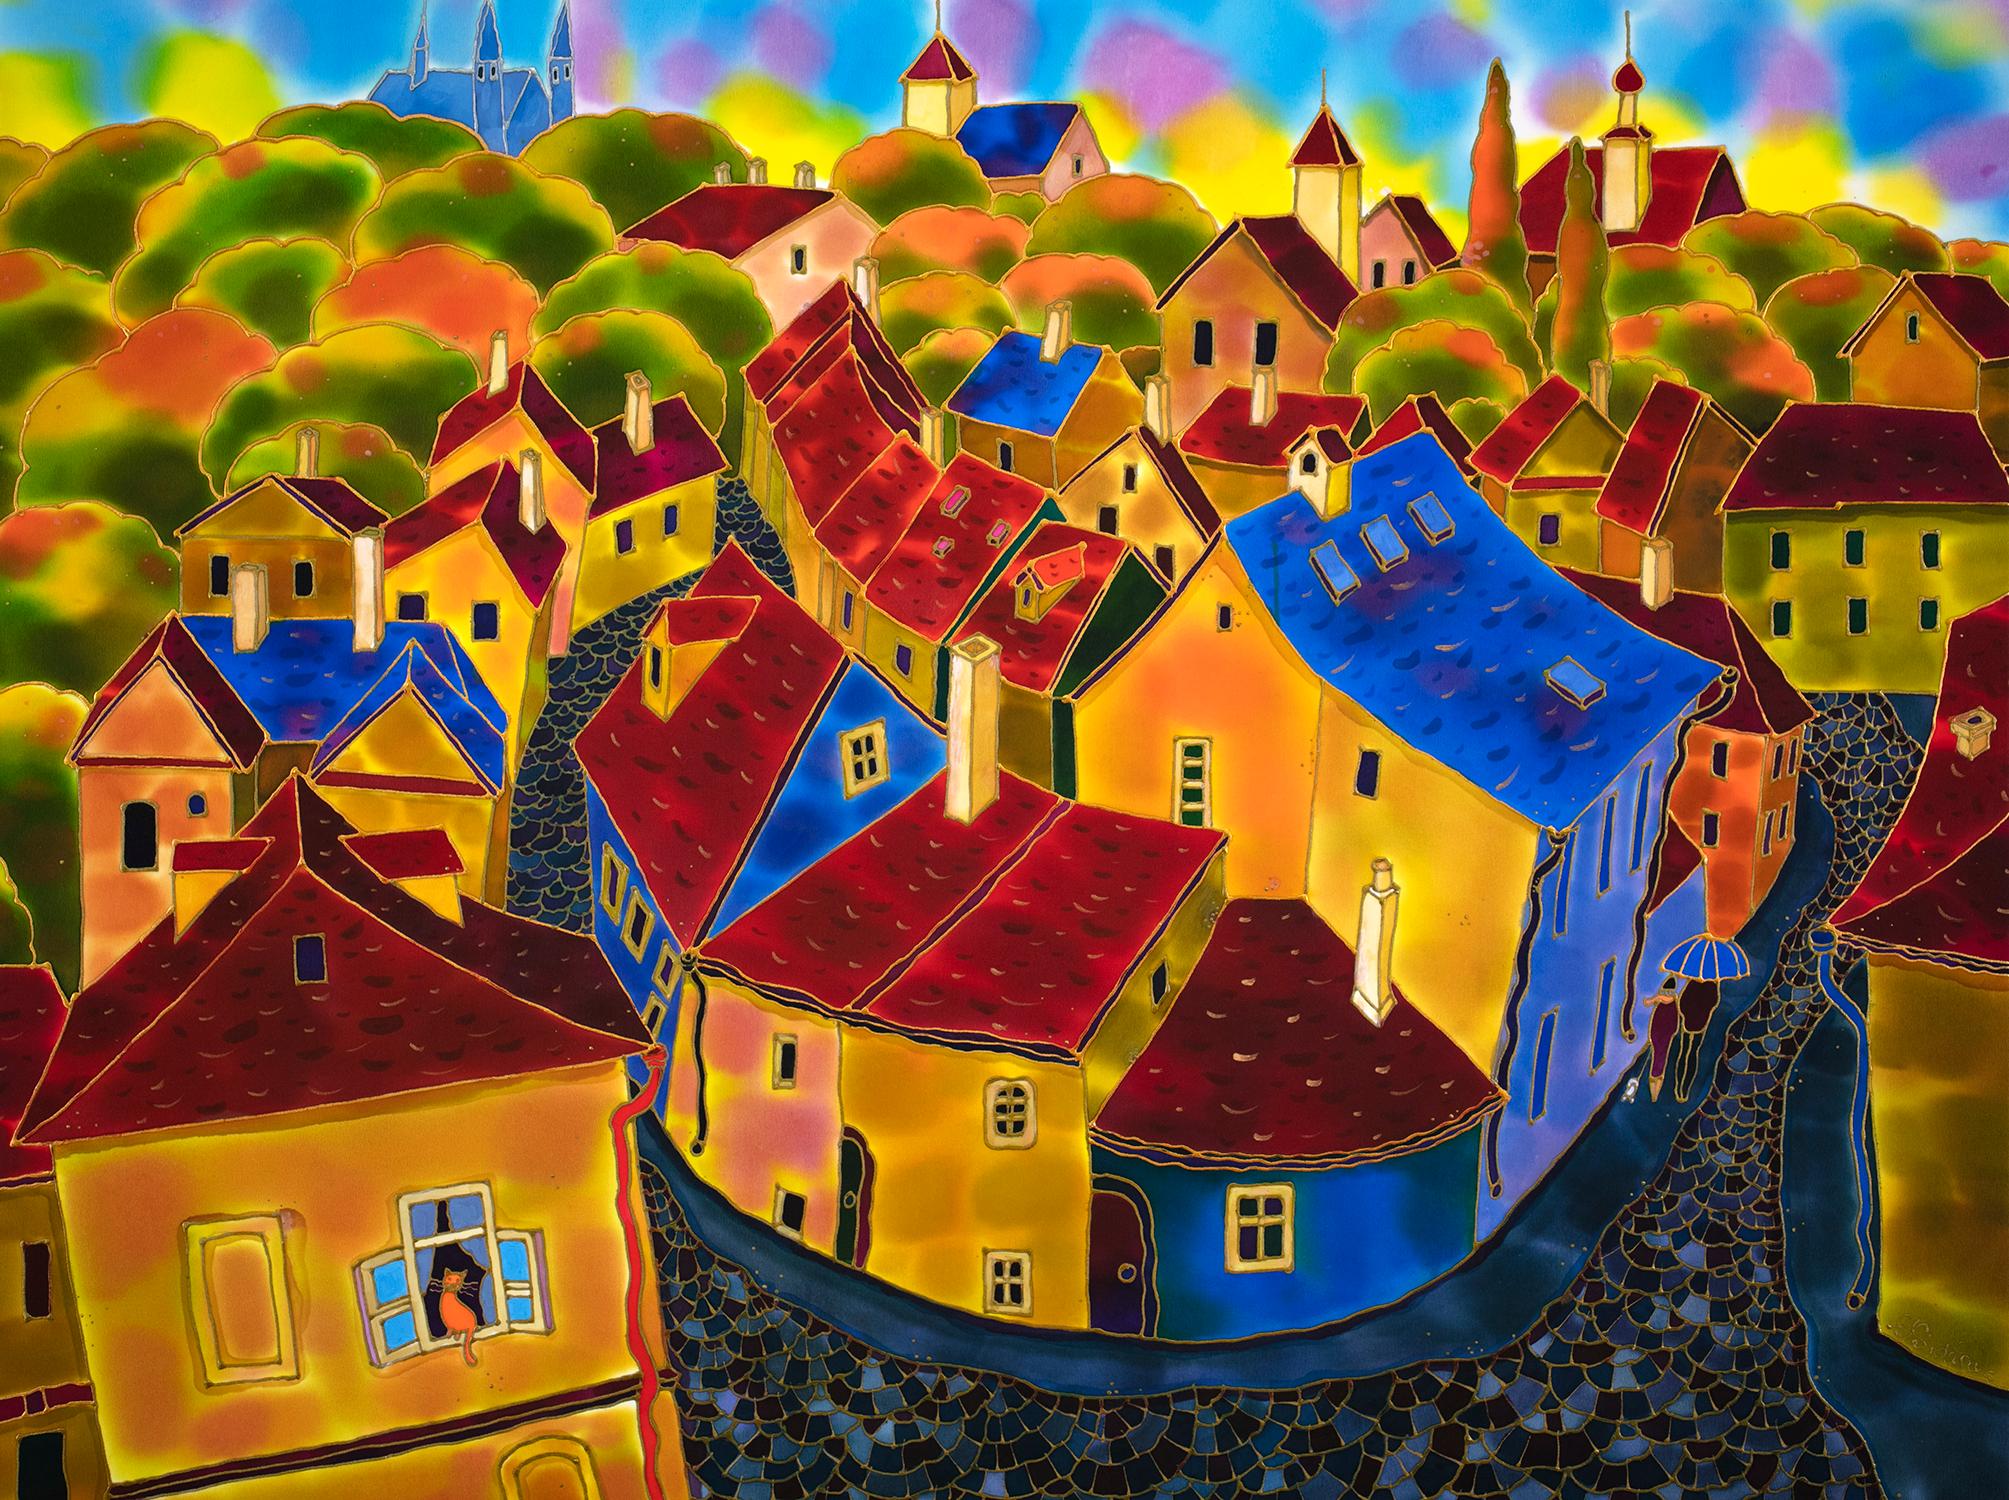 Red Roofs Prague - 3, Original Painting - Mixed Media Art by Yelena Sidorova